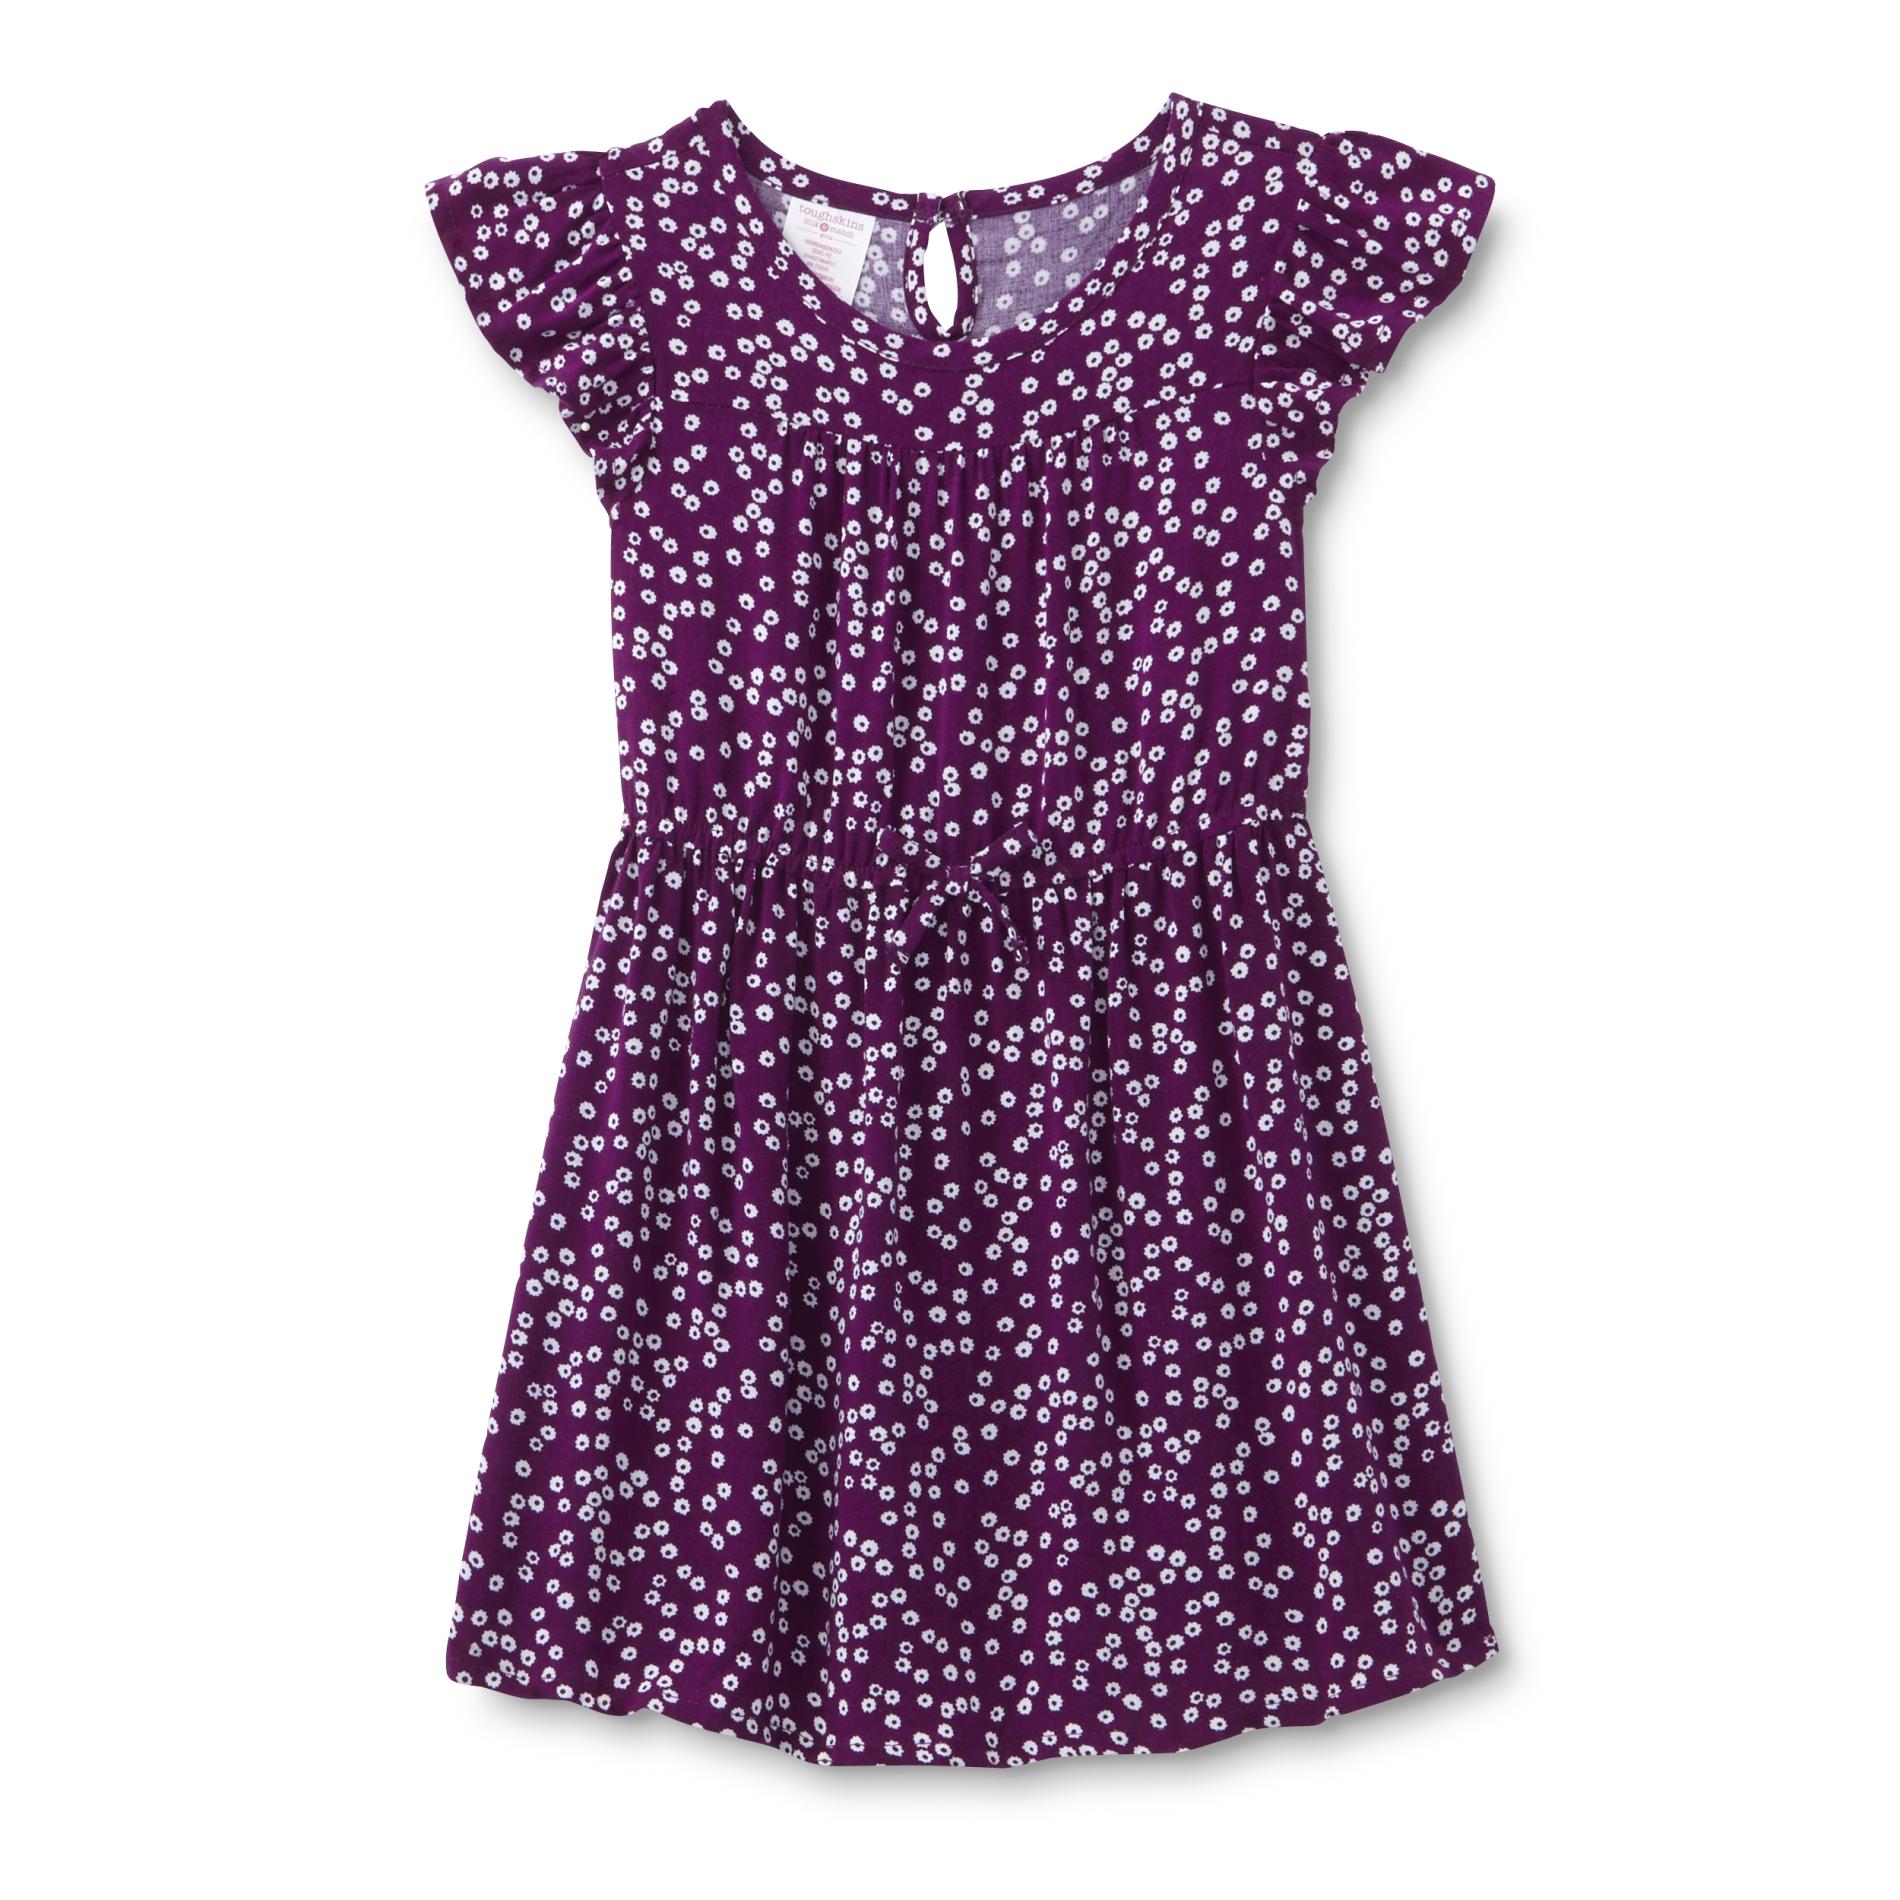 Toughskins Infant & Toddler Girl's Dress - Dots